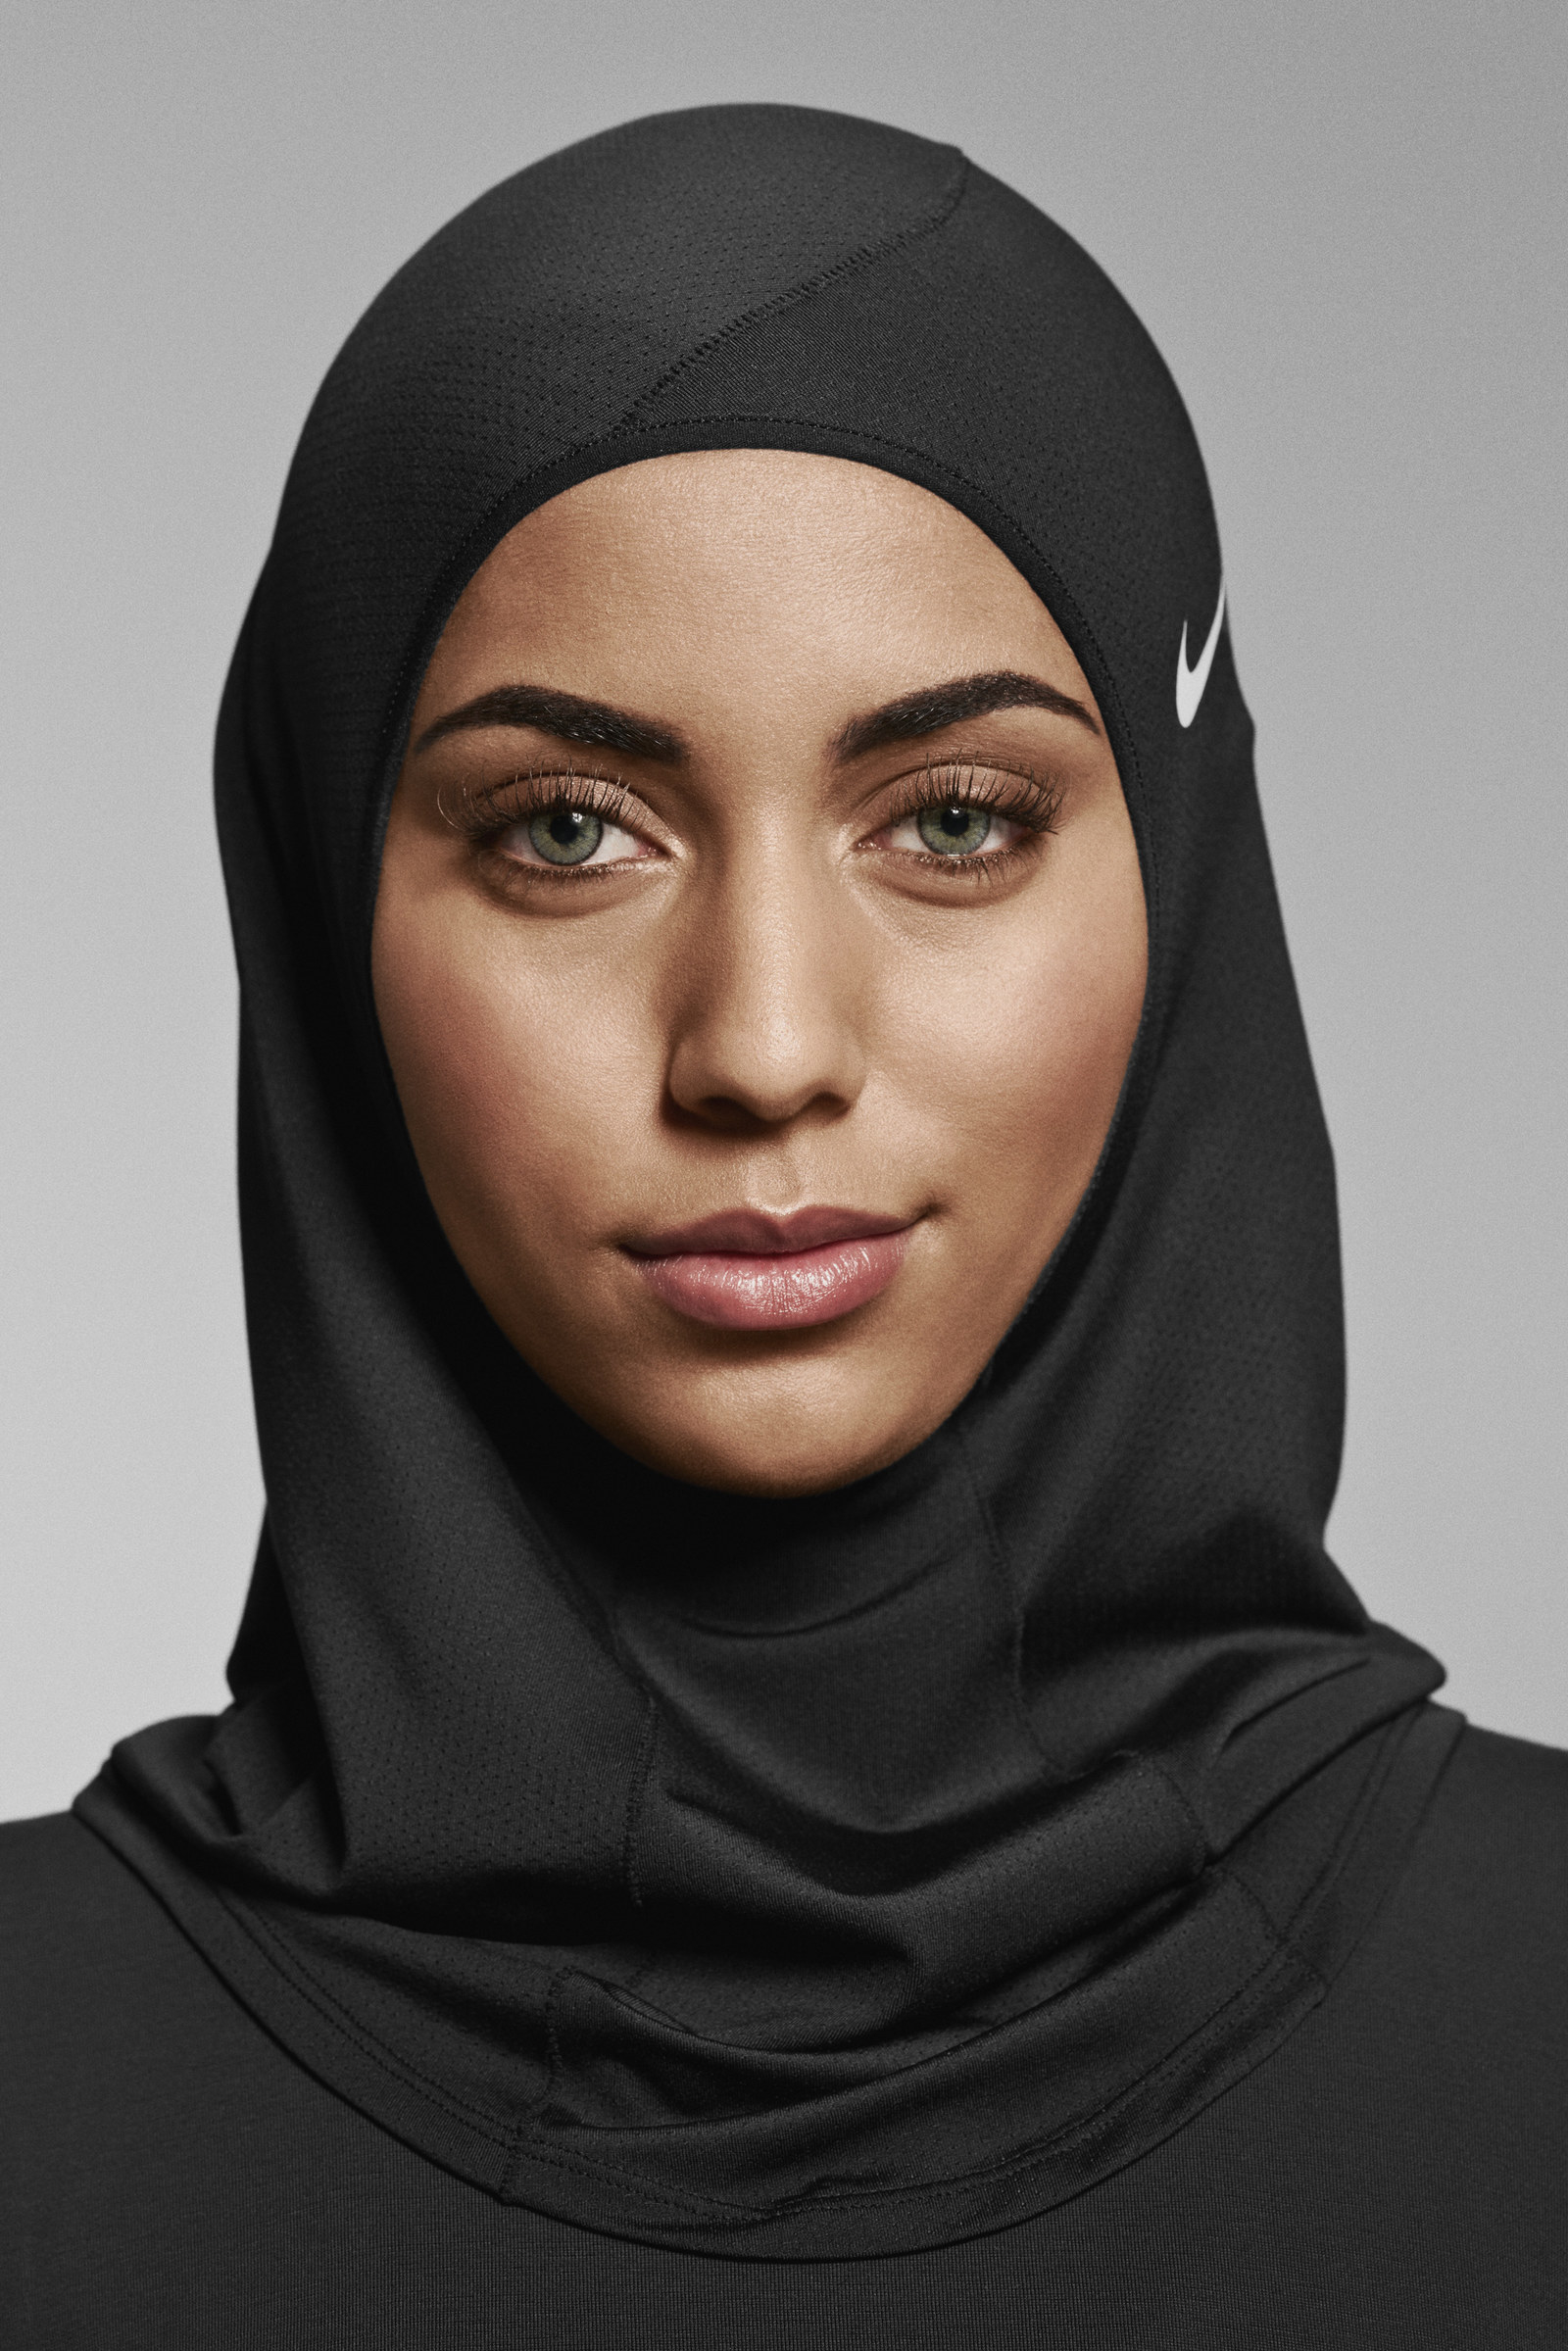 Nike launching 'pro hijab' for Muslim women athletes